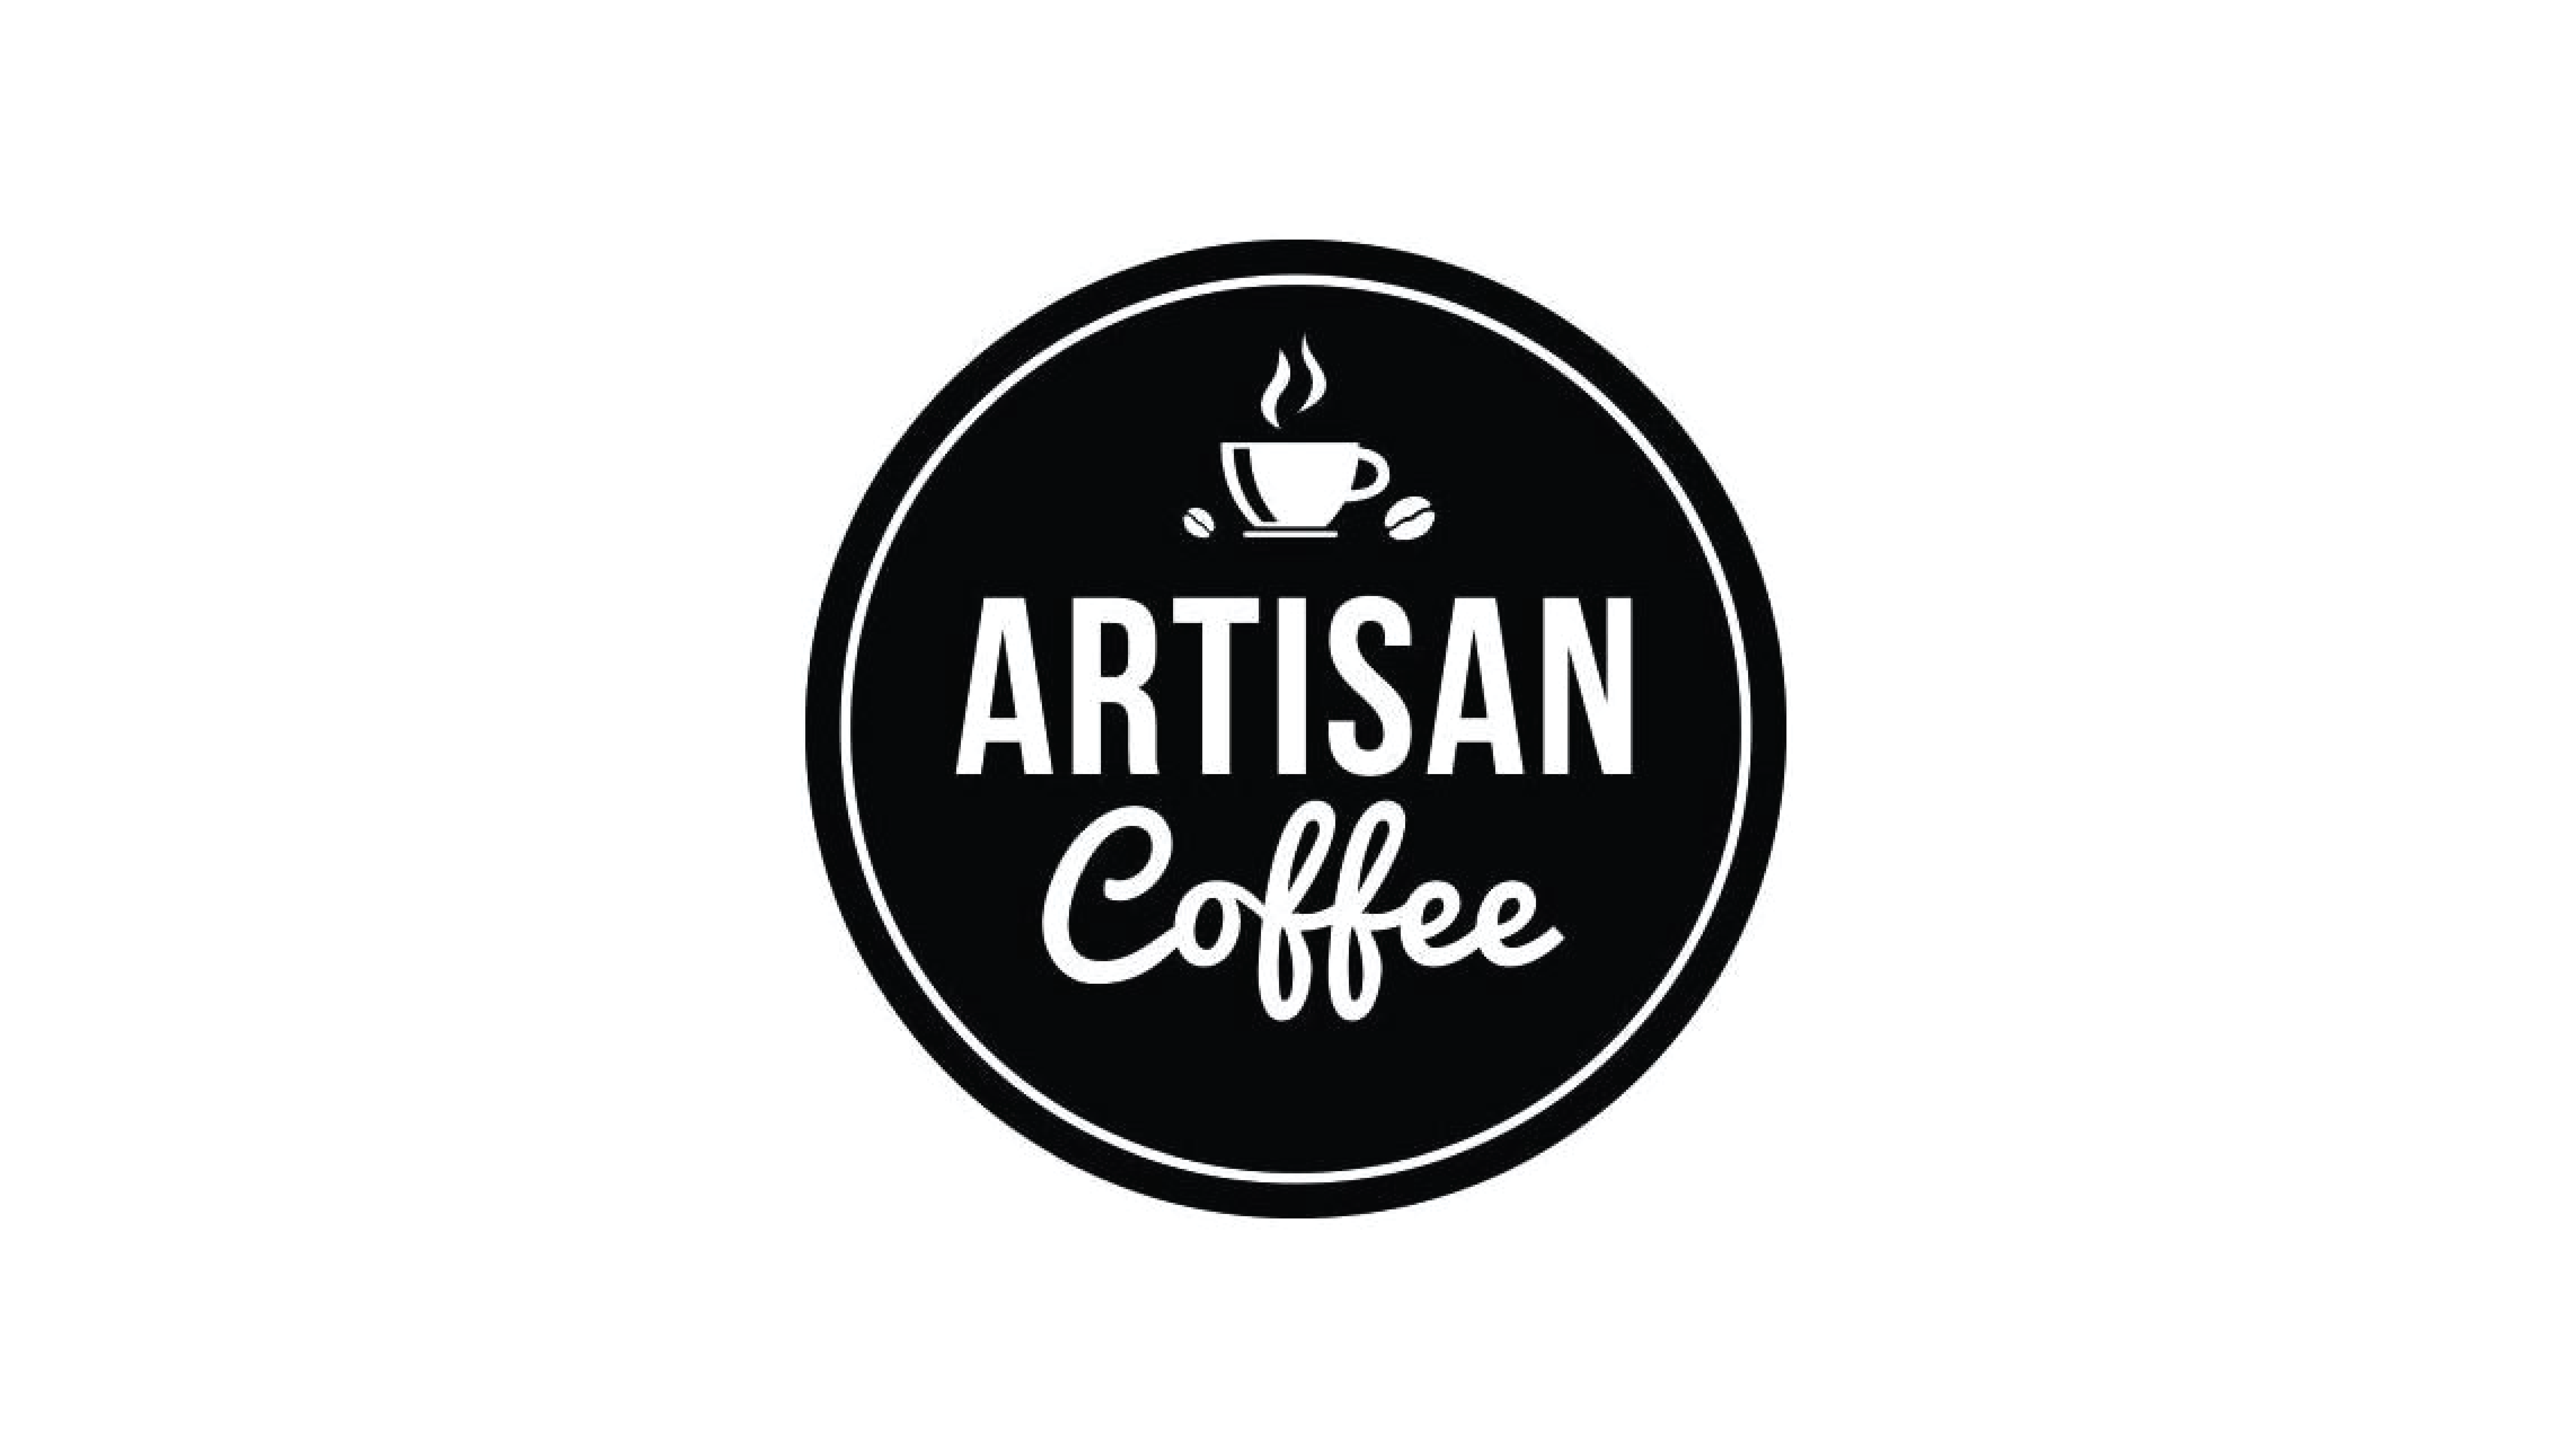 ARTISAN COFFEE